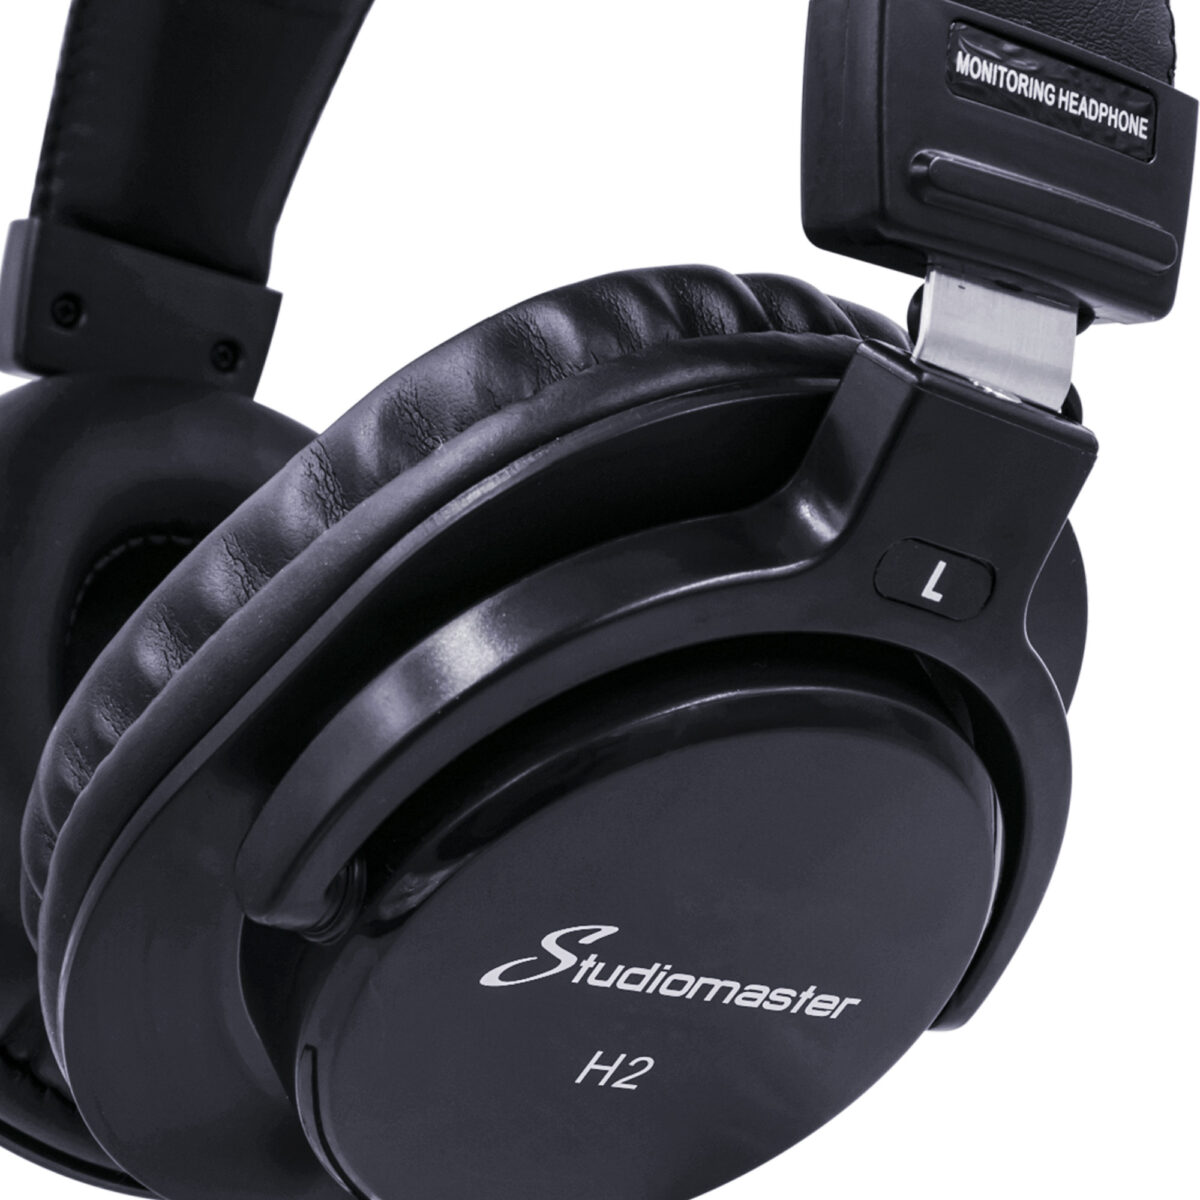 Studiomaster H2 Monitoring Headphone